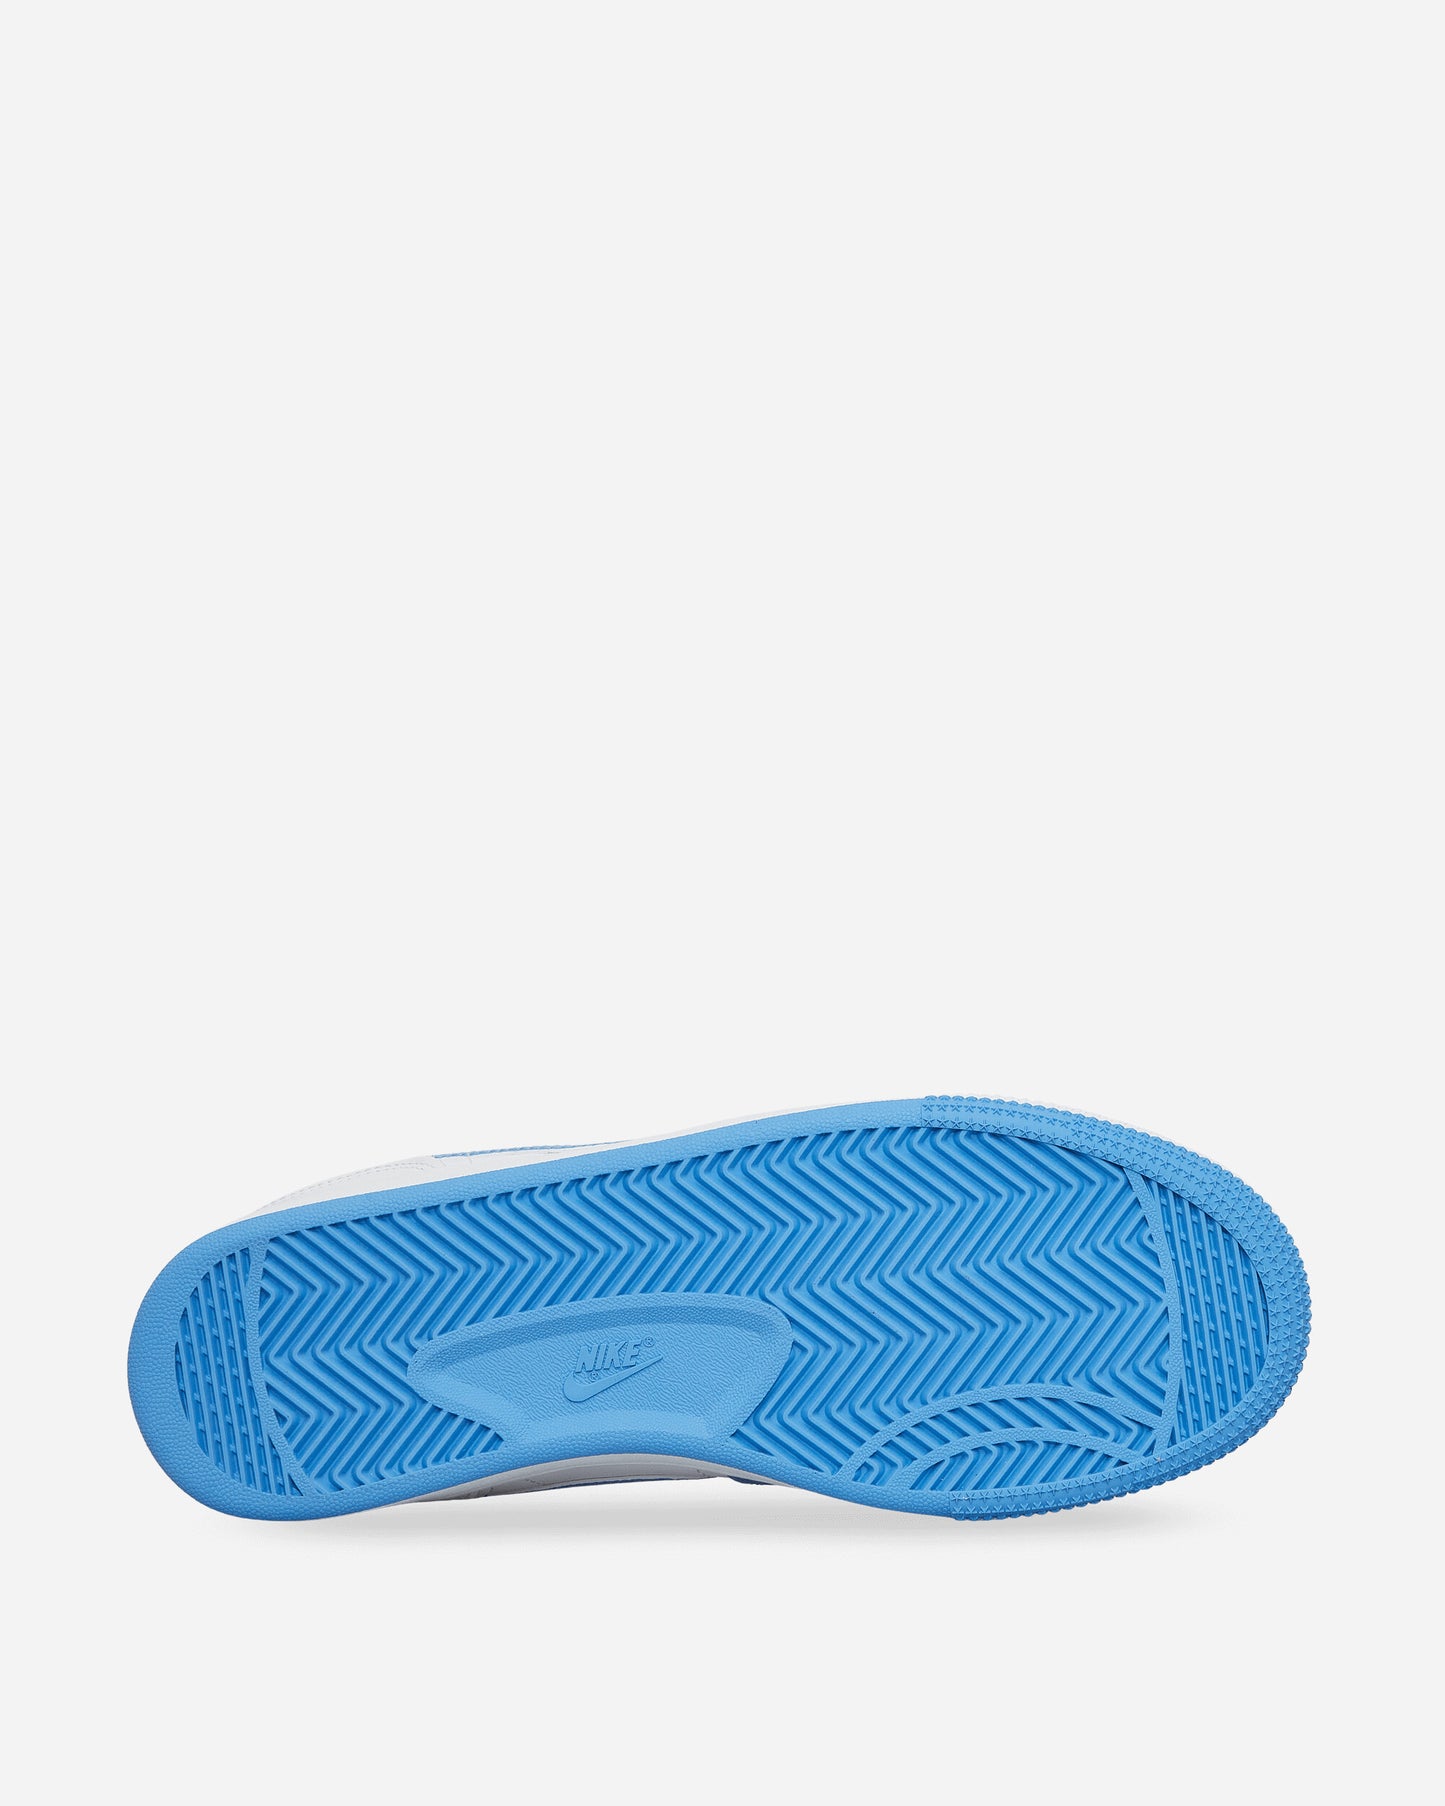 Nike Nike Terminator Low University Blue/White Sneakers Low FQ8748-412